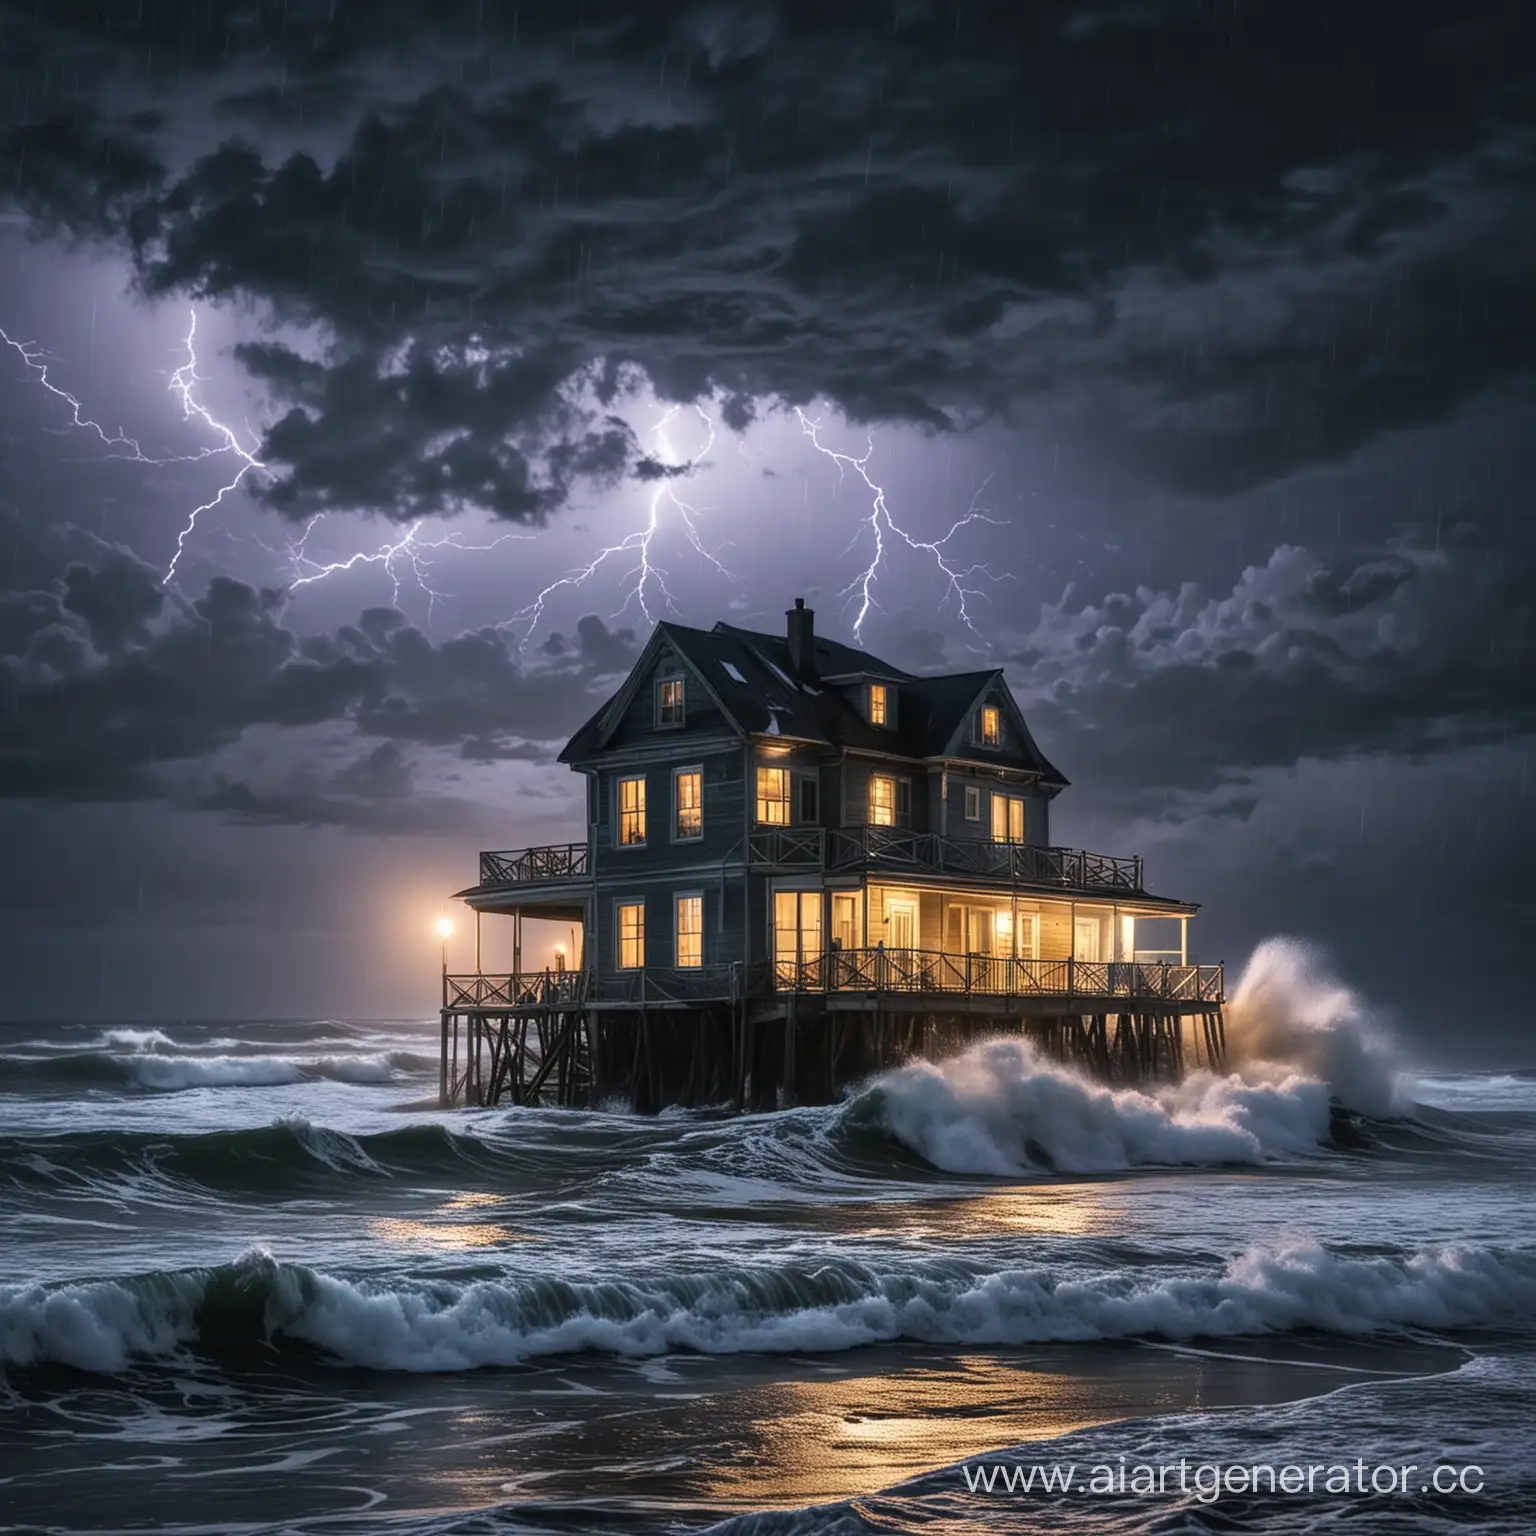 дом на берегу океана во время морского шторма ночью